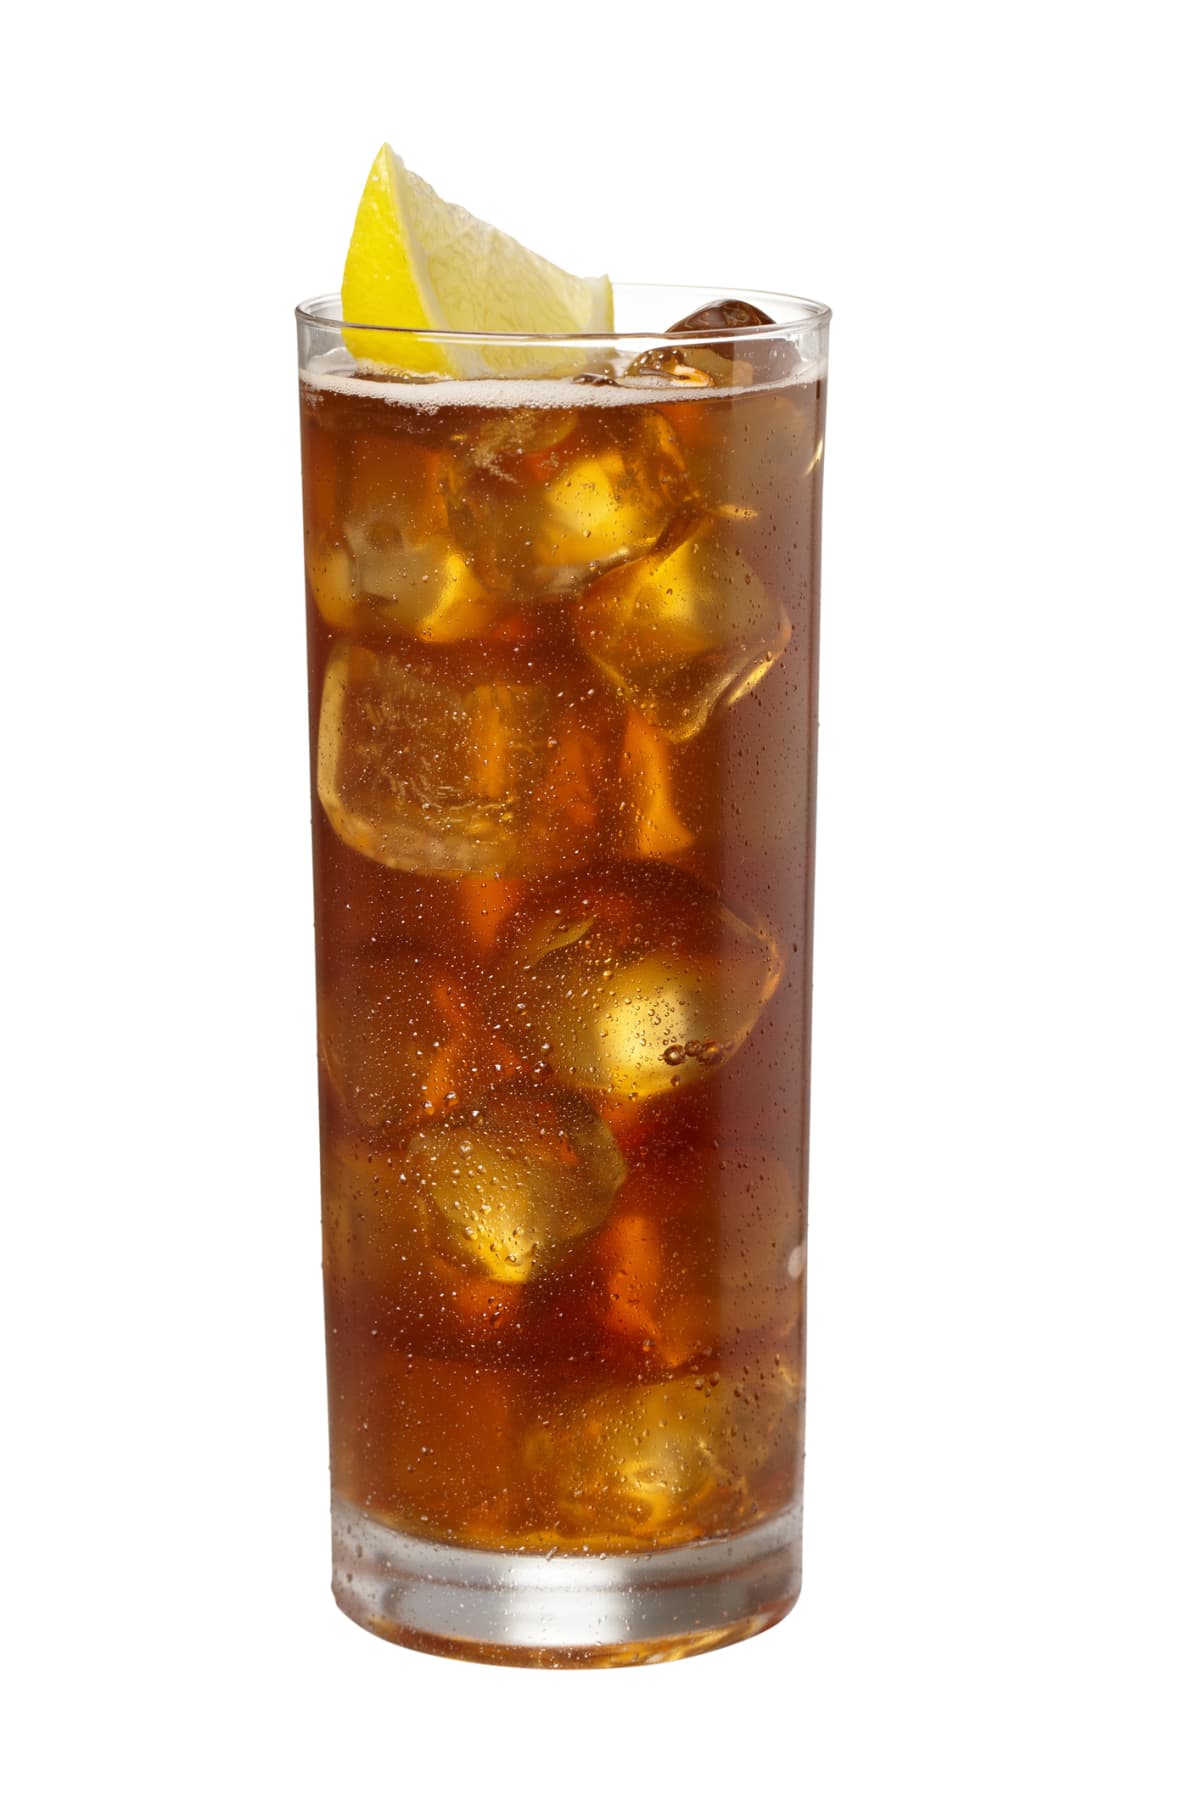 Tall glass of iced tea with lemon